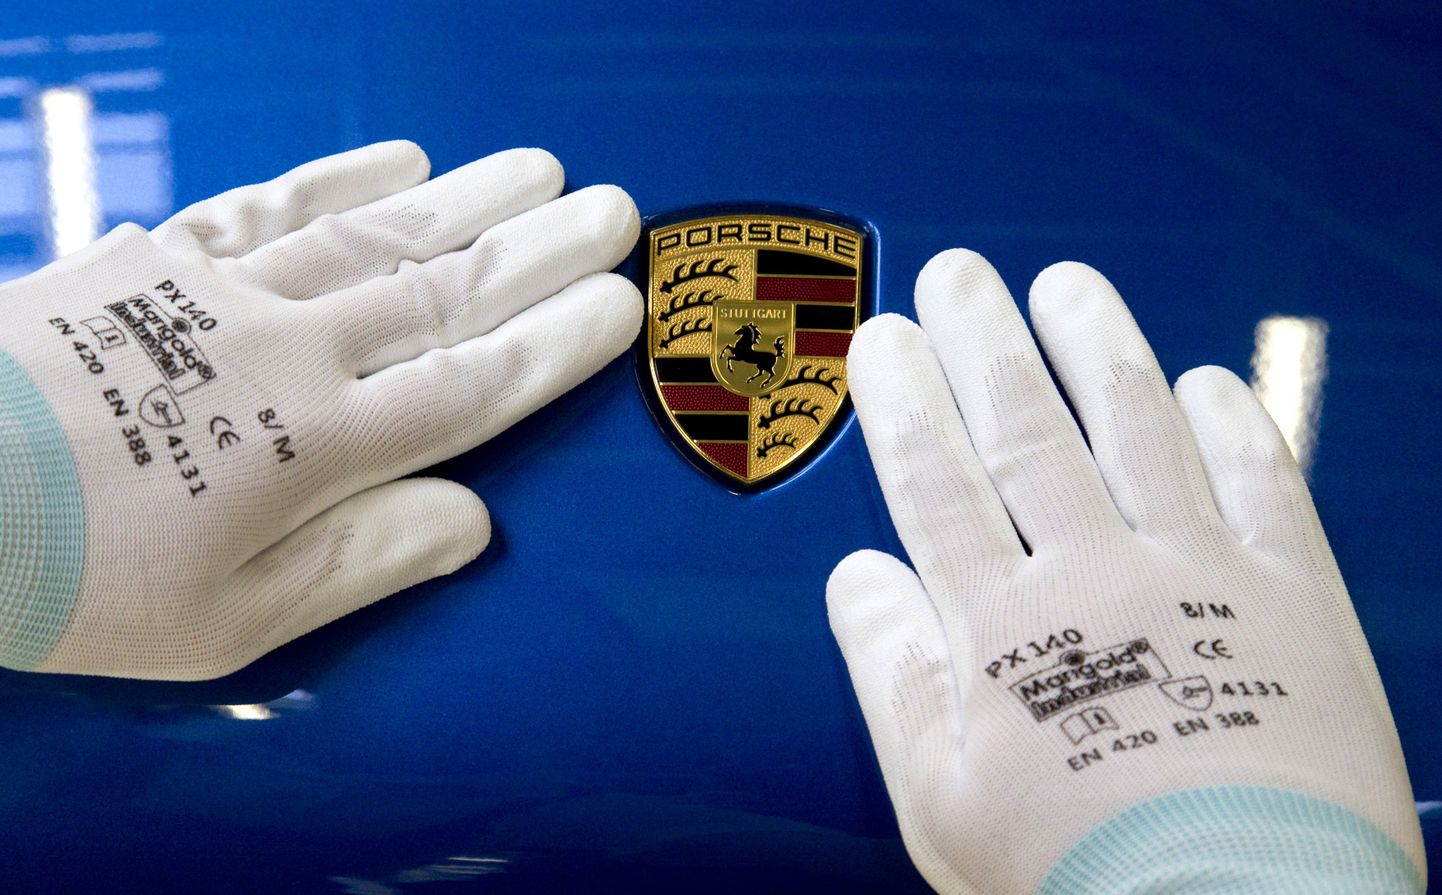 Porschede müük Saksamaal mullu kasvas.